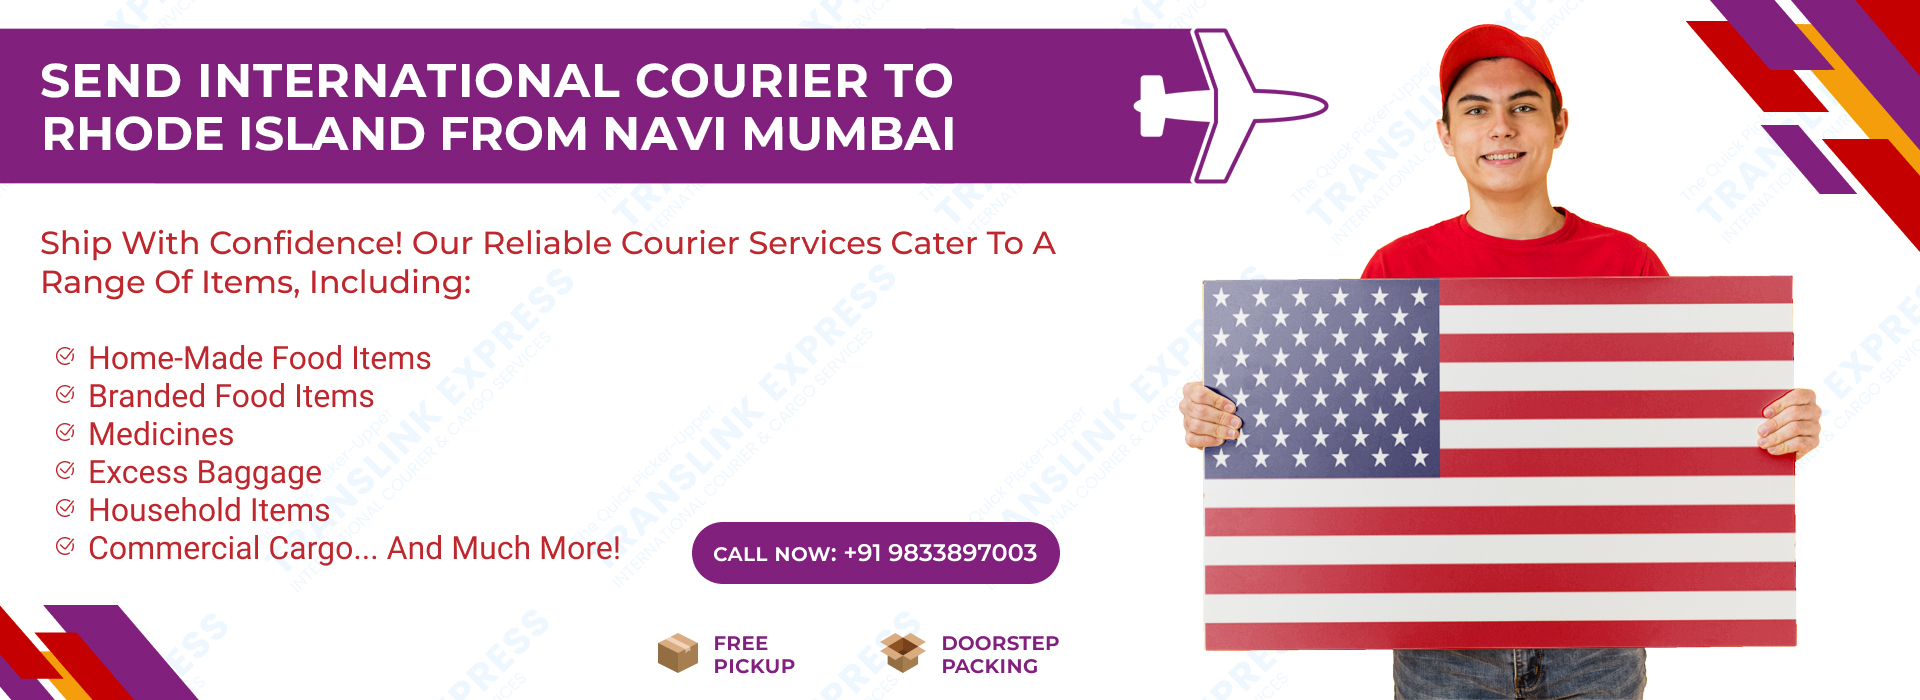 Courier to Rhode Island From Navi Mumbai